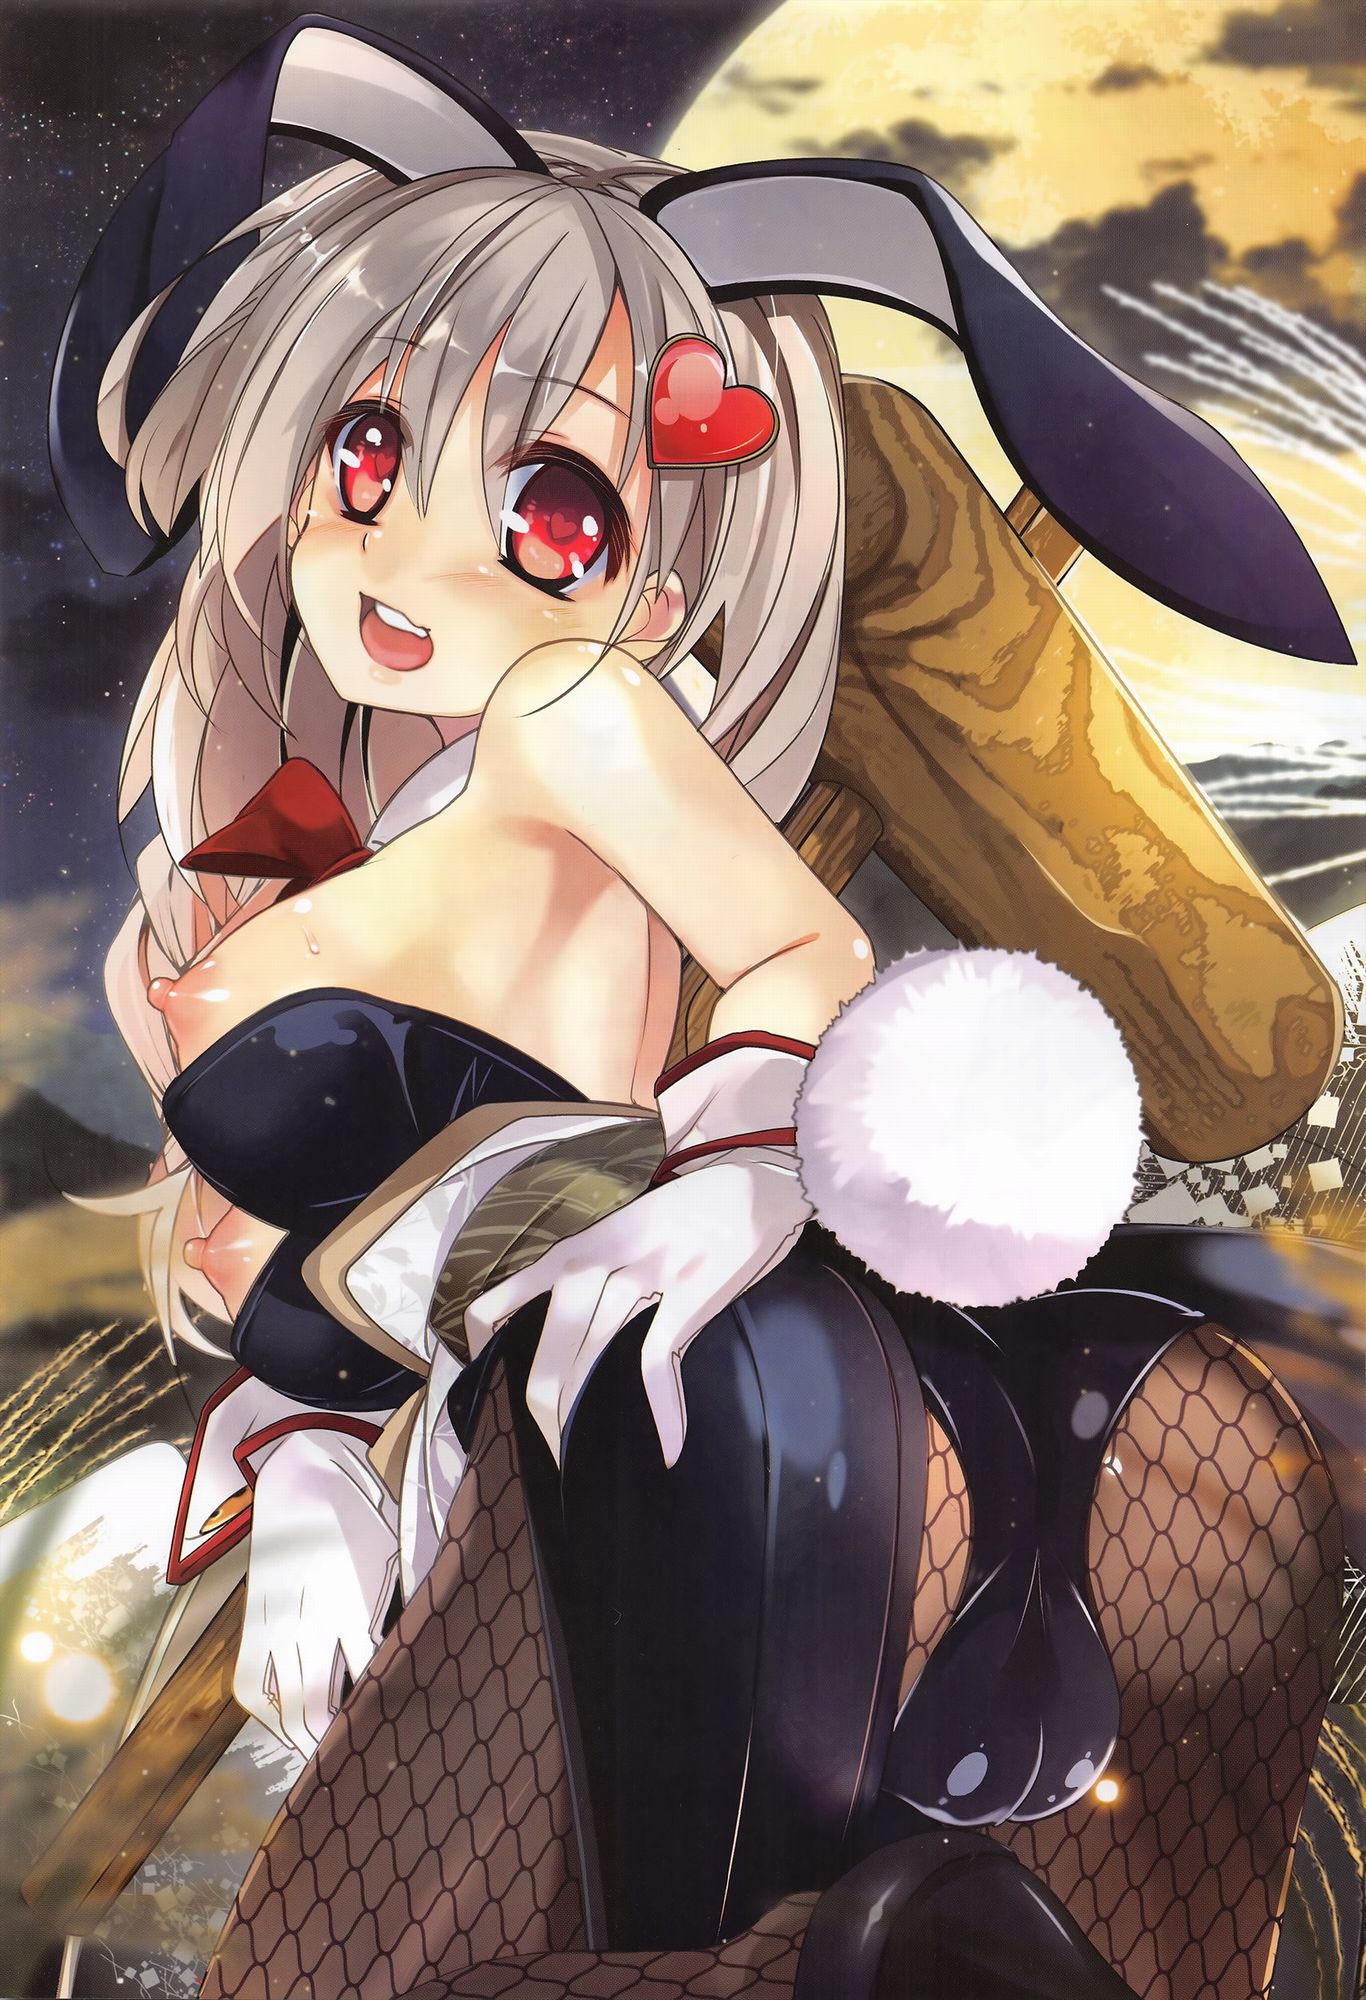 [Secondary, ZIP] bunnysuit dressed girl picture, please! 48